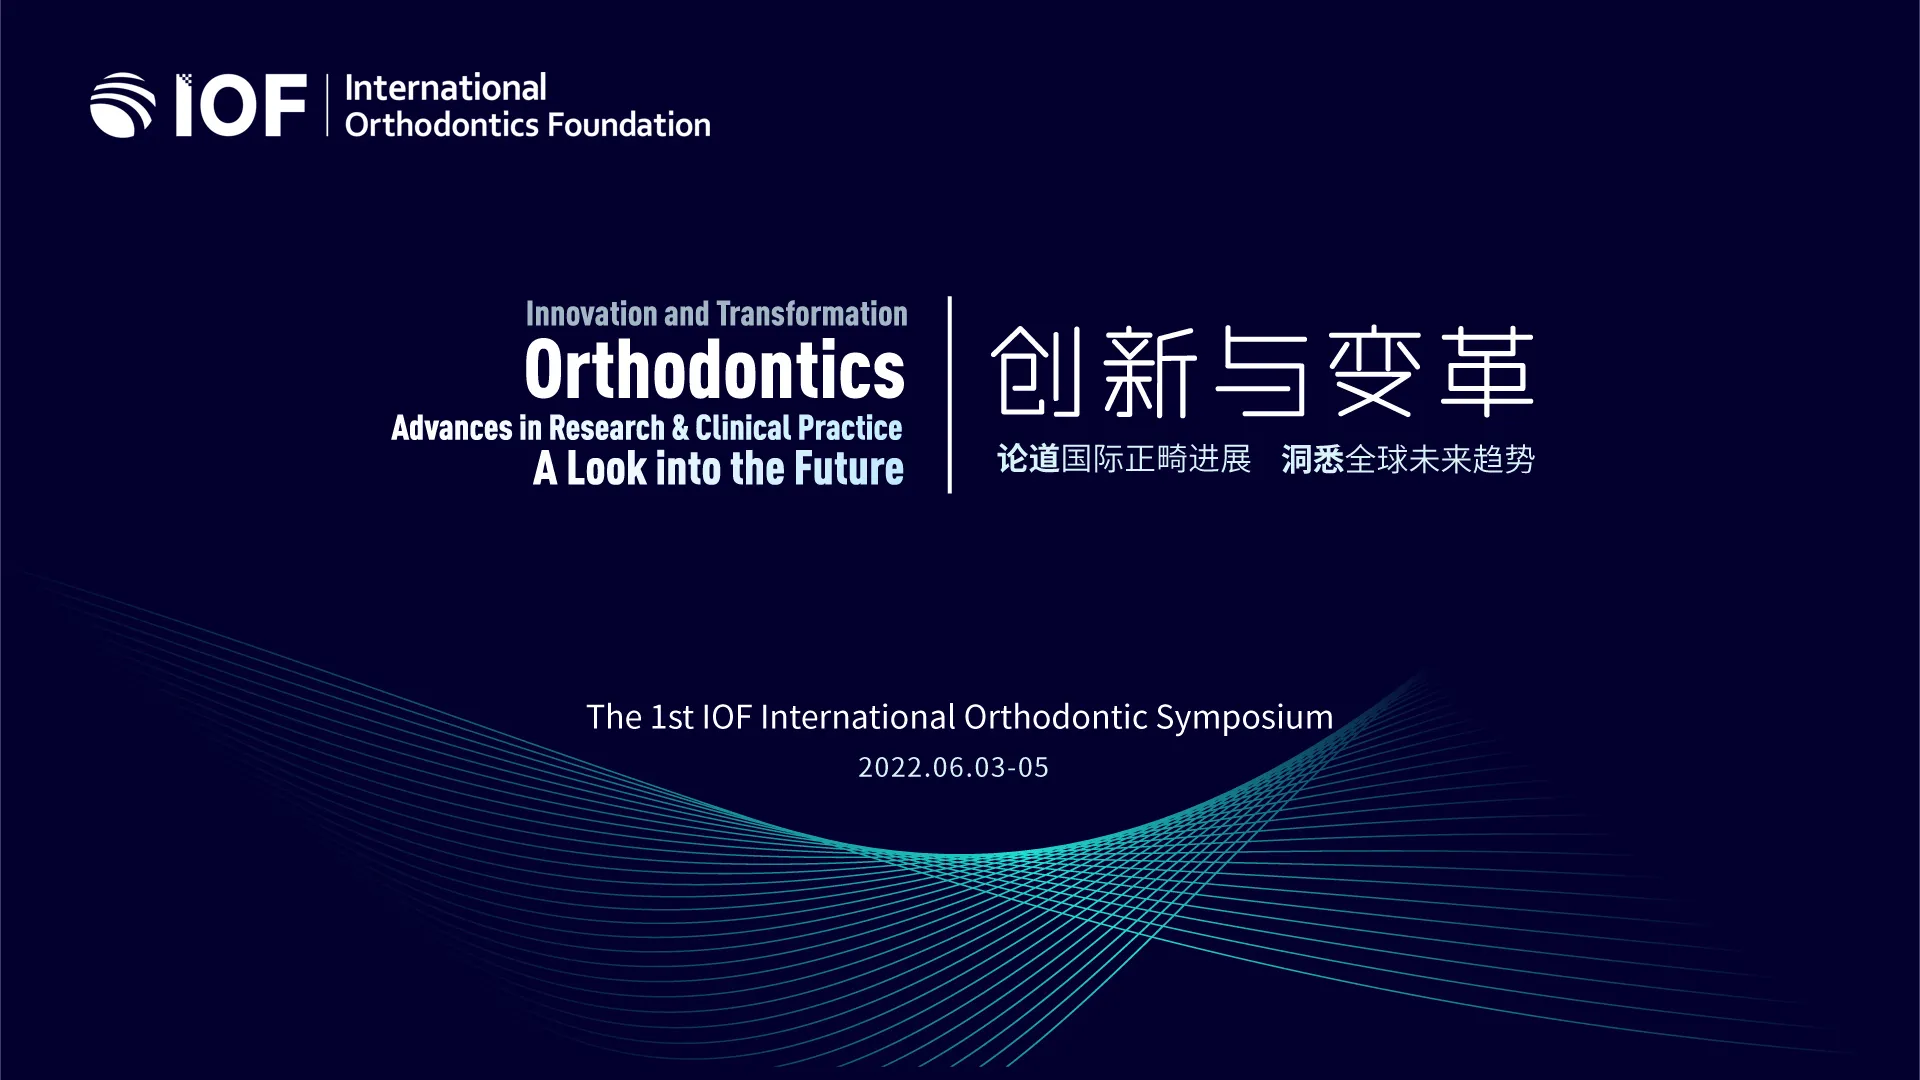 The 1st IOF International Orthodontic Symposium